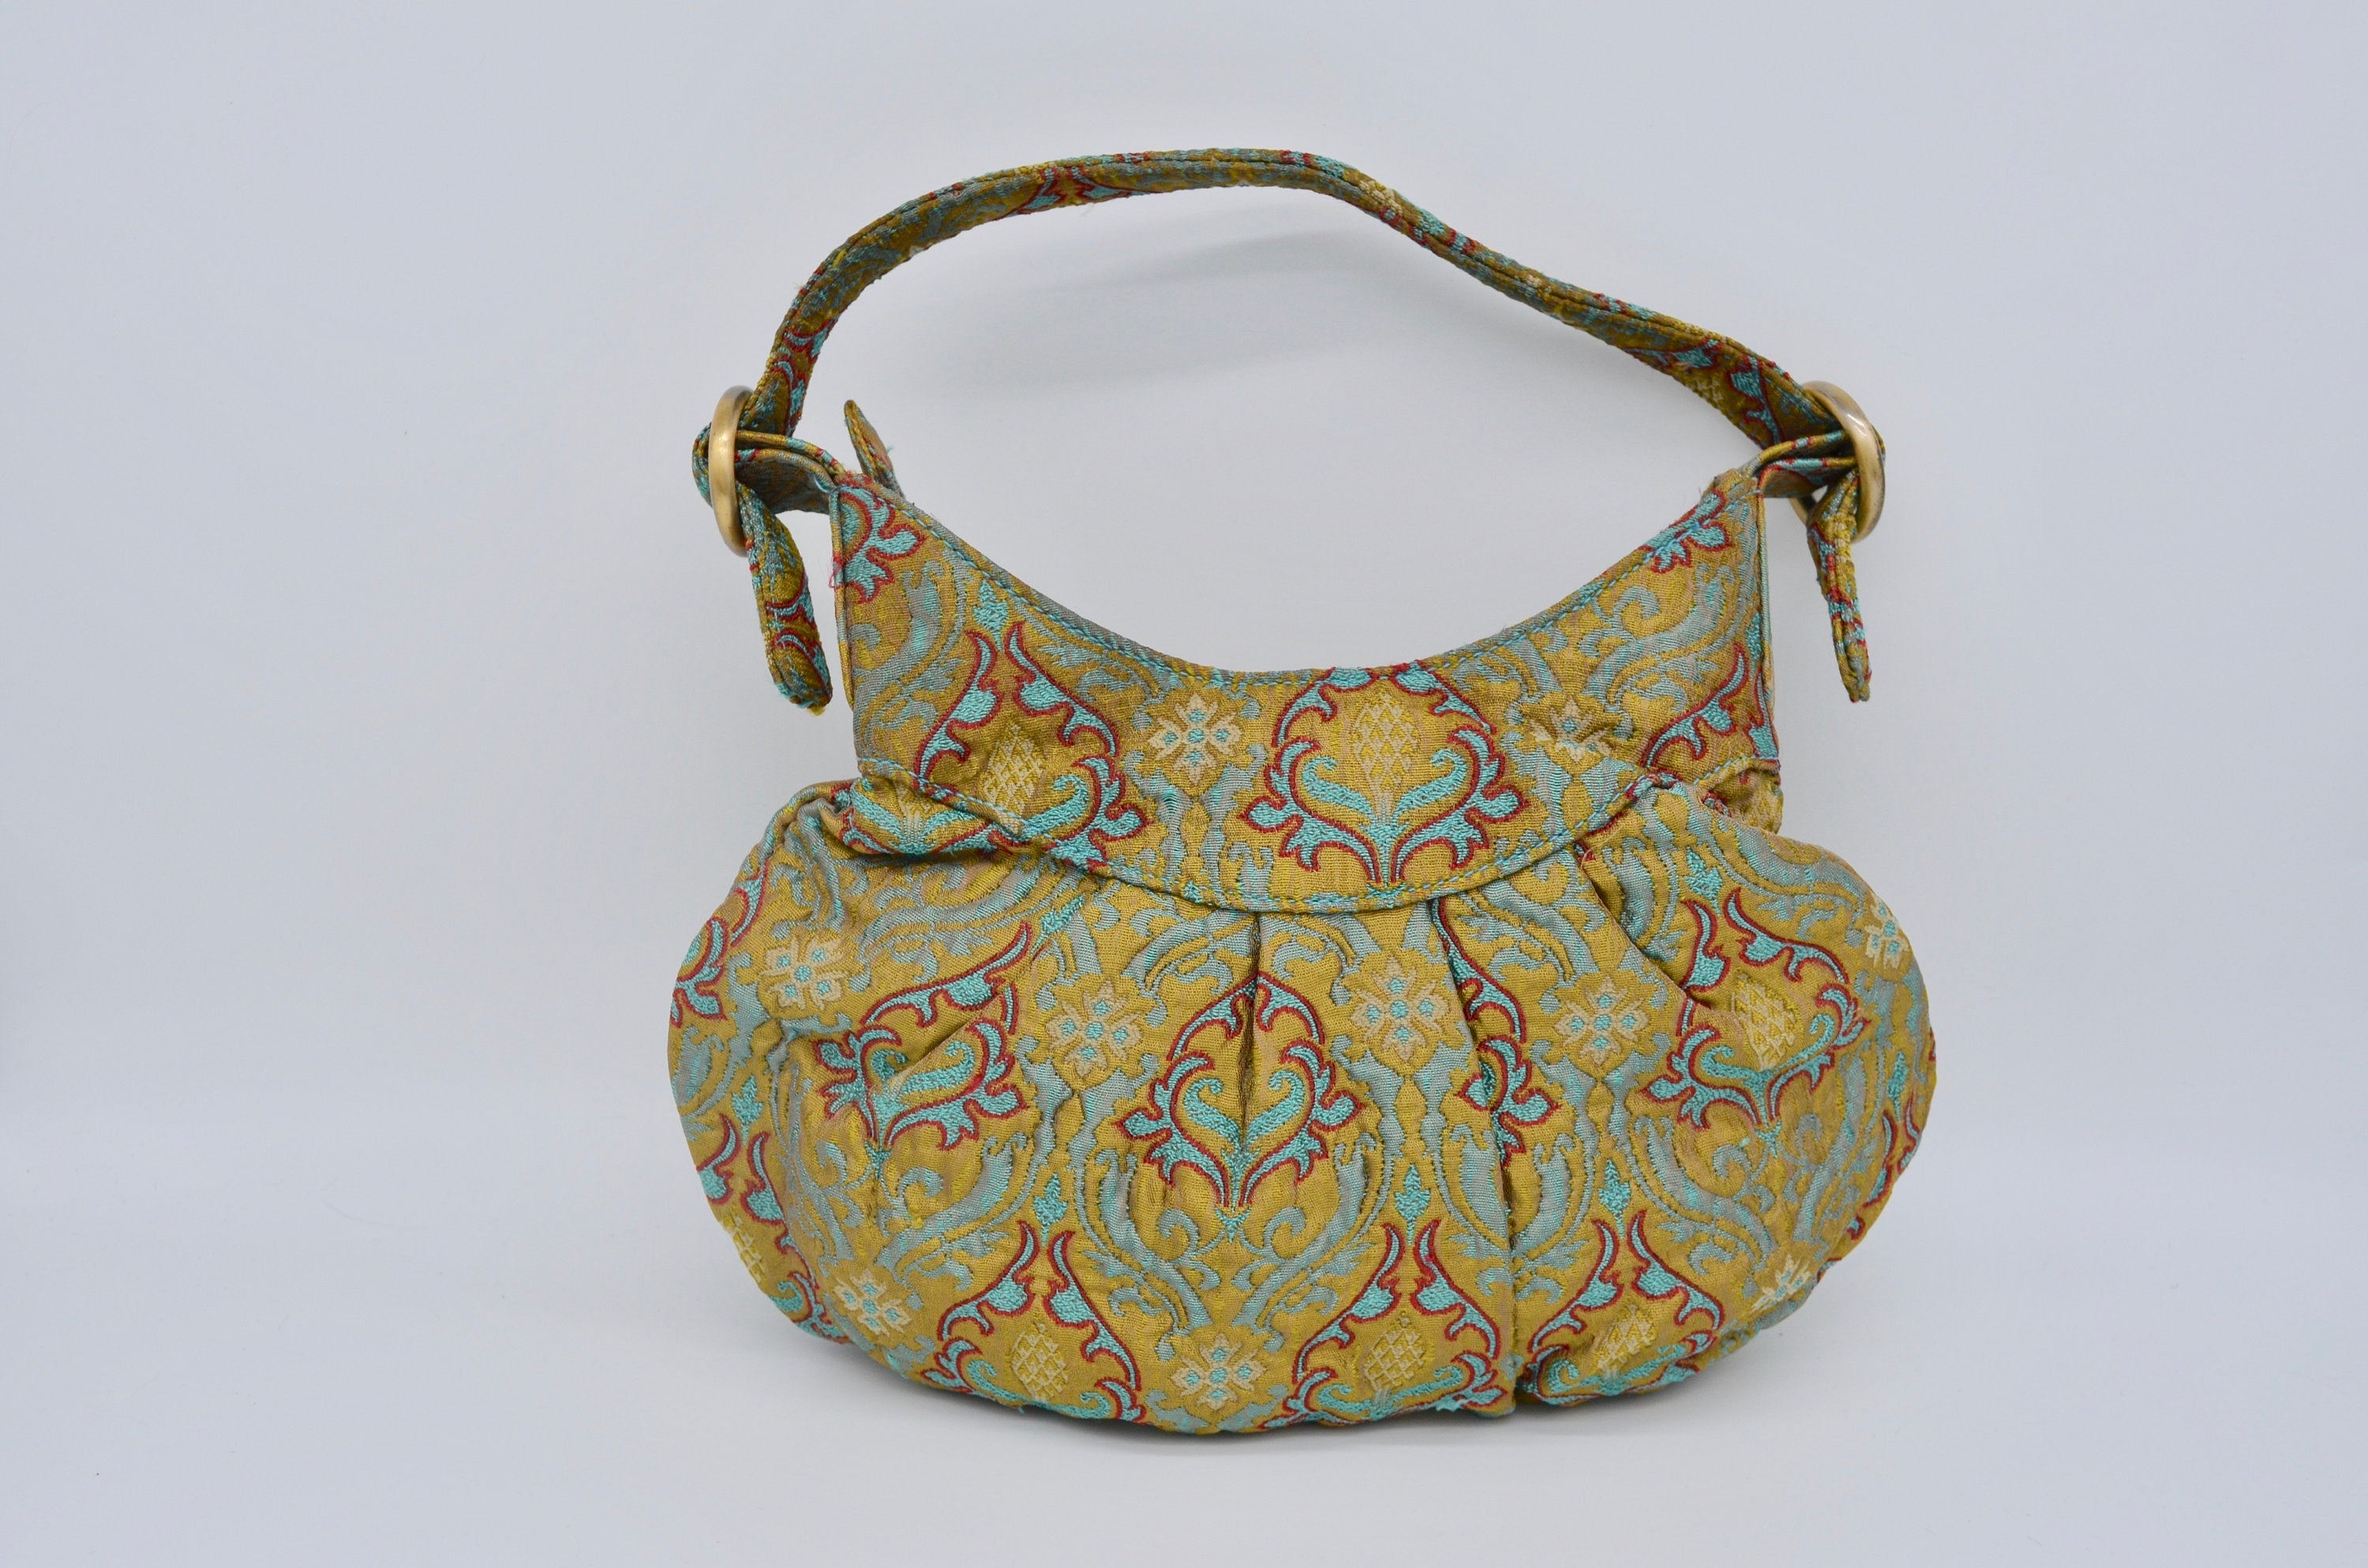 Enzo Angiolini Fabric Mini Bag Miniature Handbag Top Handle Jewel Brooch Fashion Summer